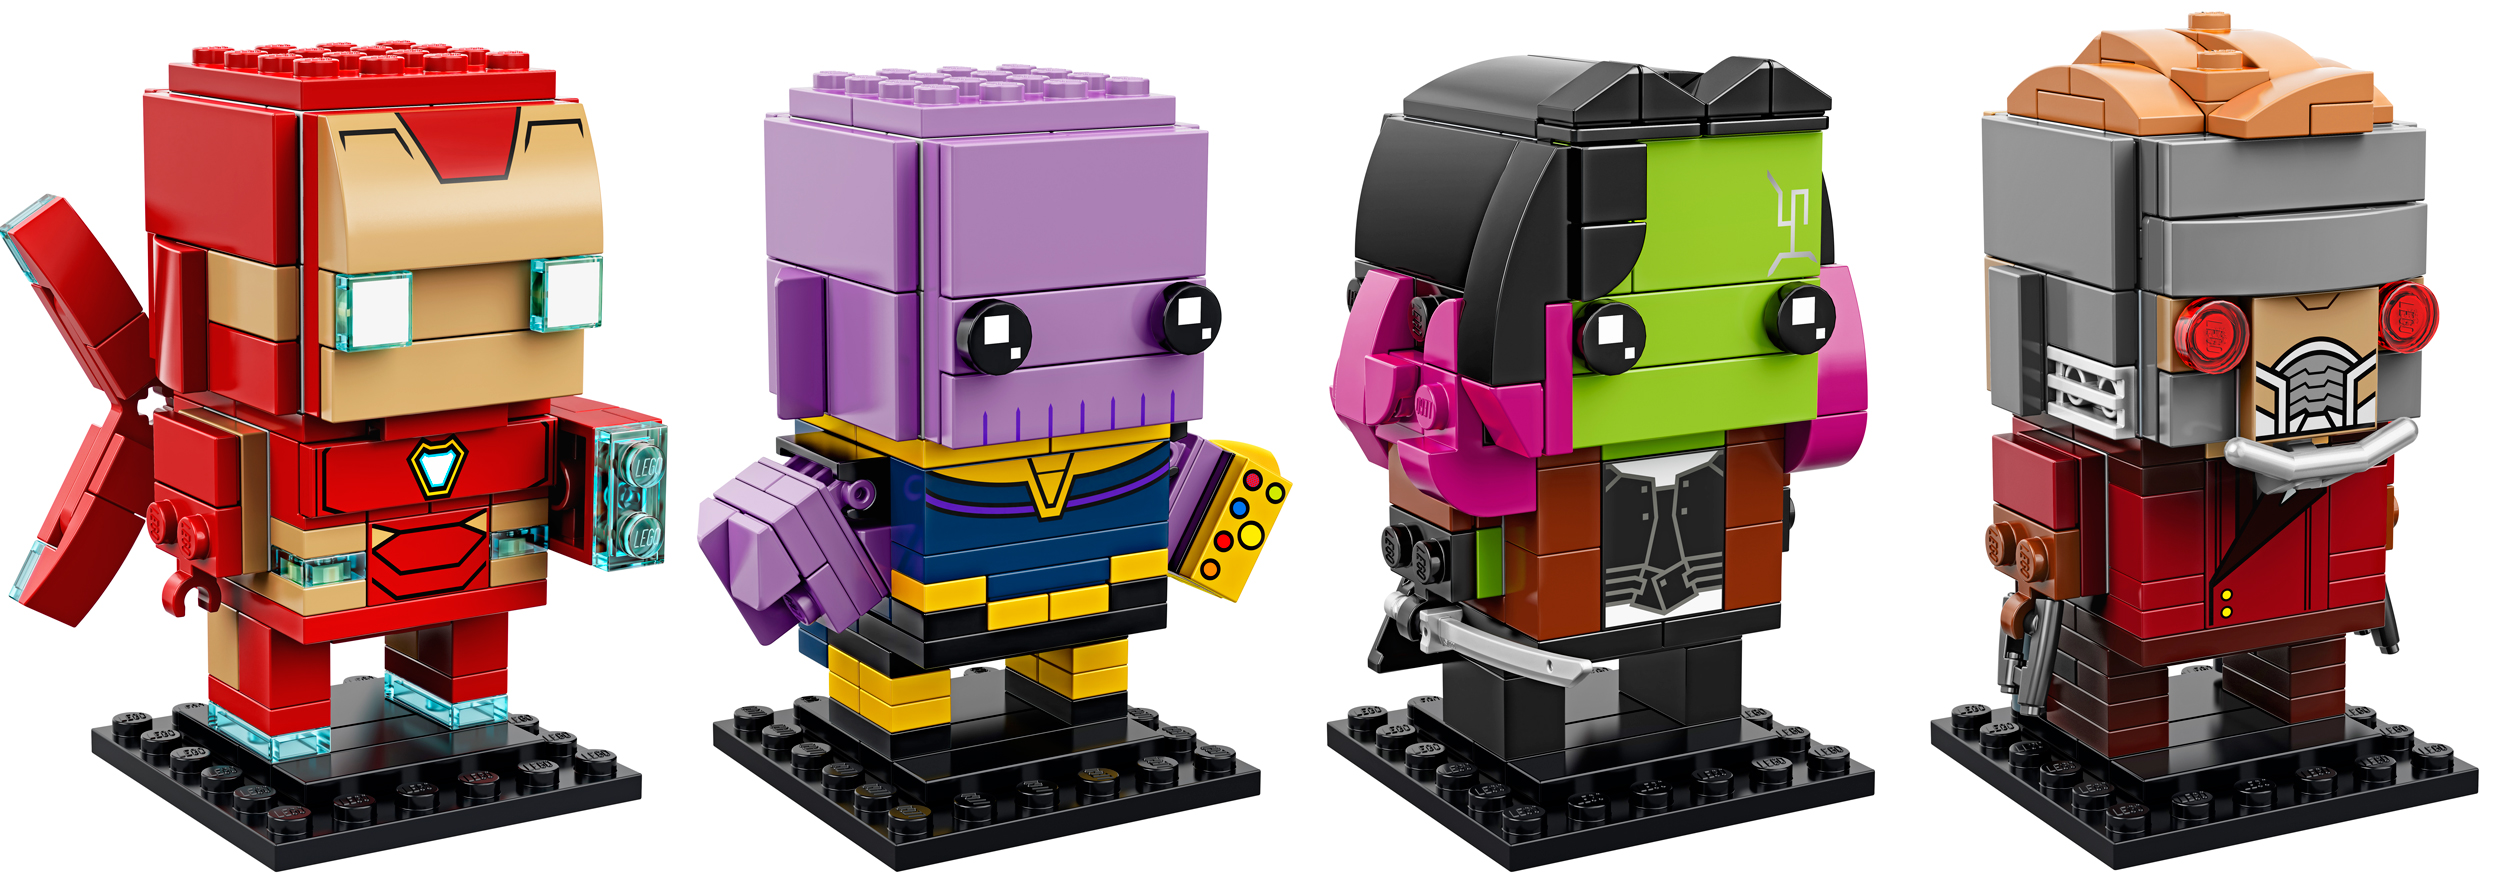 Exclusive: Thanos, Iron Man, Gamora, And Star-Lord Are Getting The Lego Brickheadz Treatment